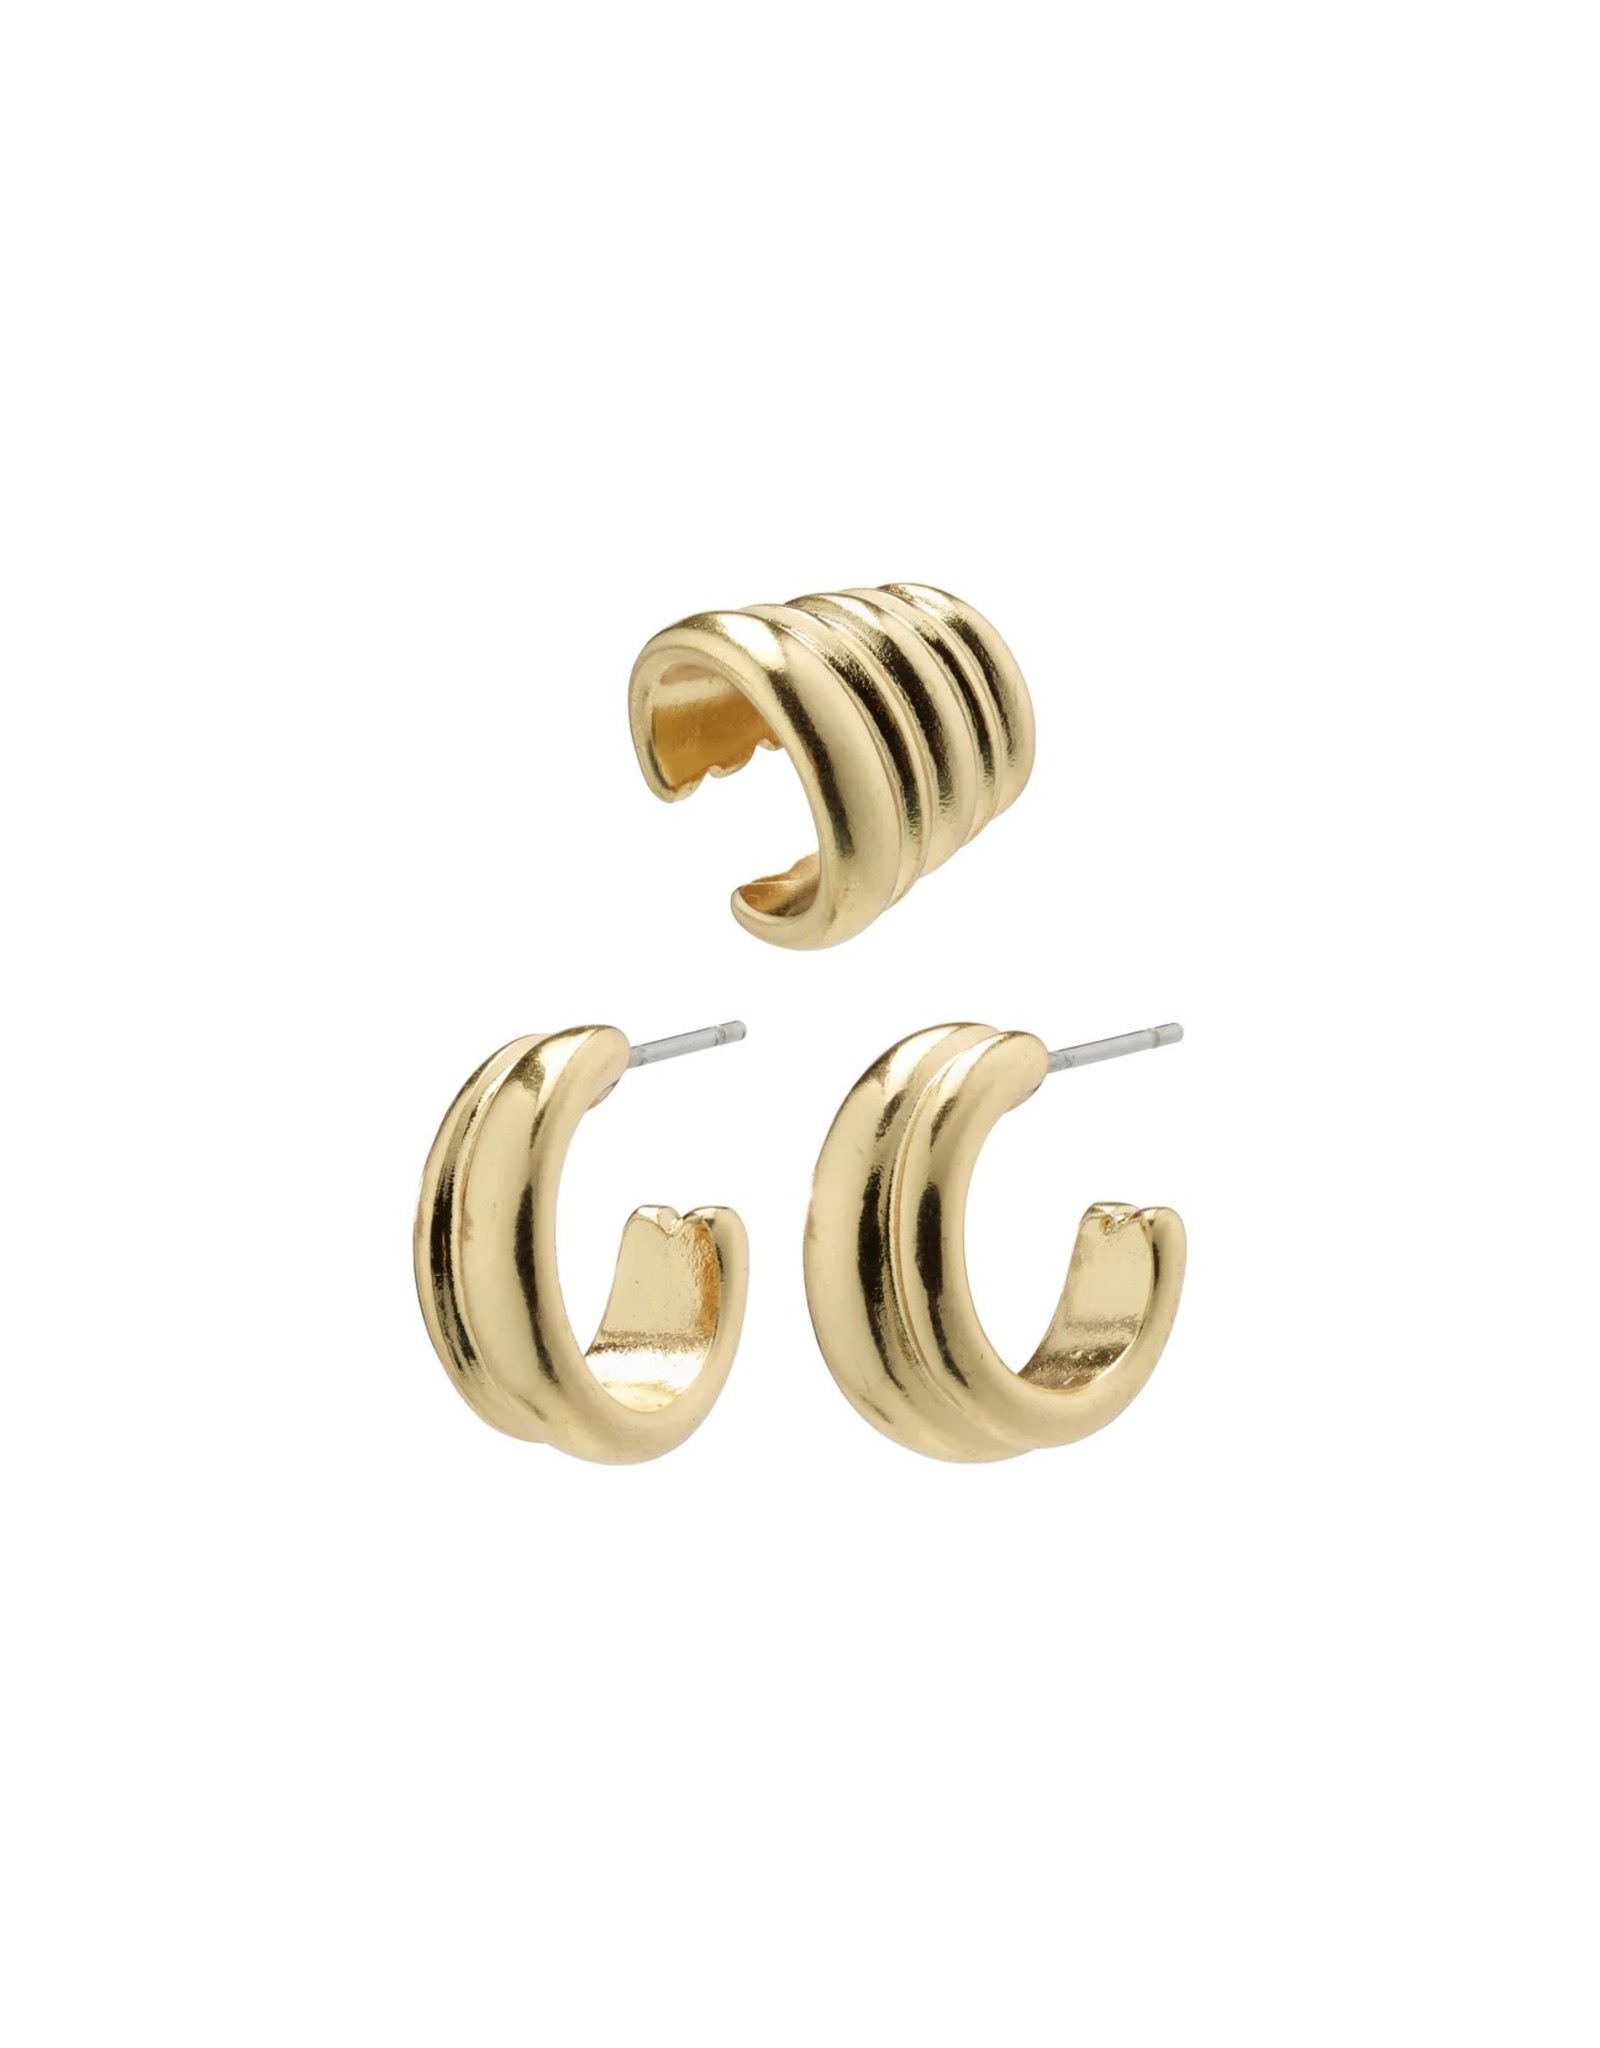 Biscuit General Store Pilgrim - Nadya Hopp and Cuff Earrings 2 in 1 / Gold